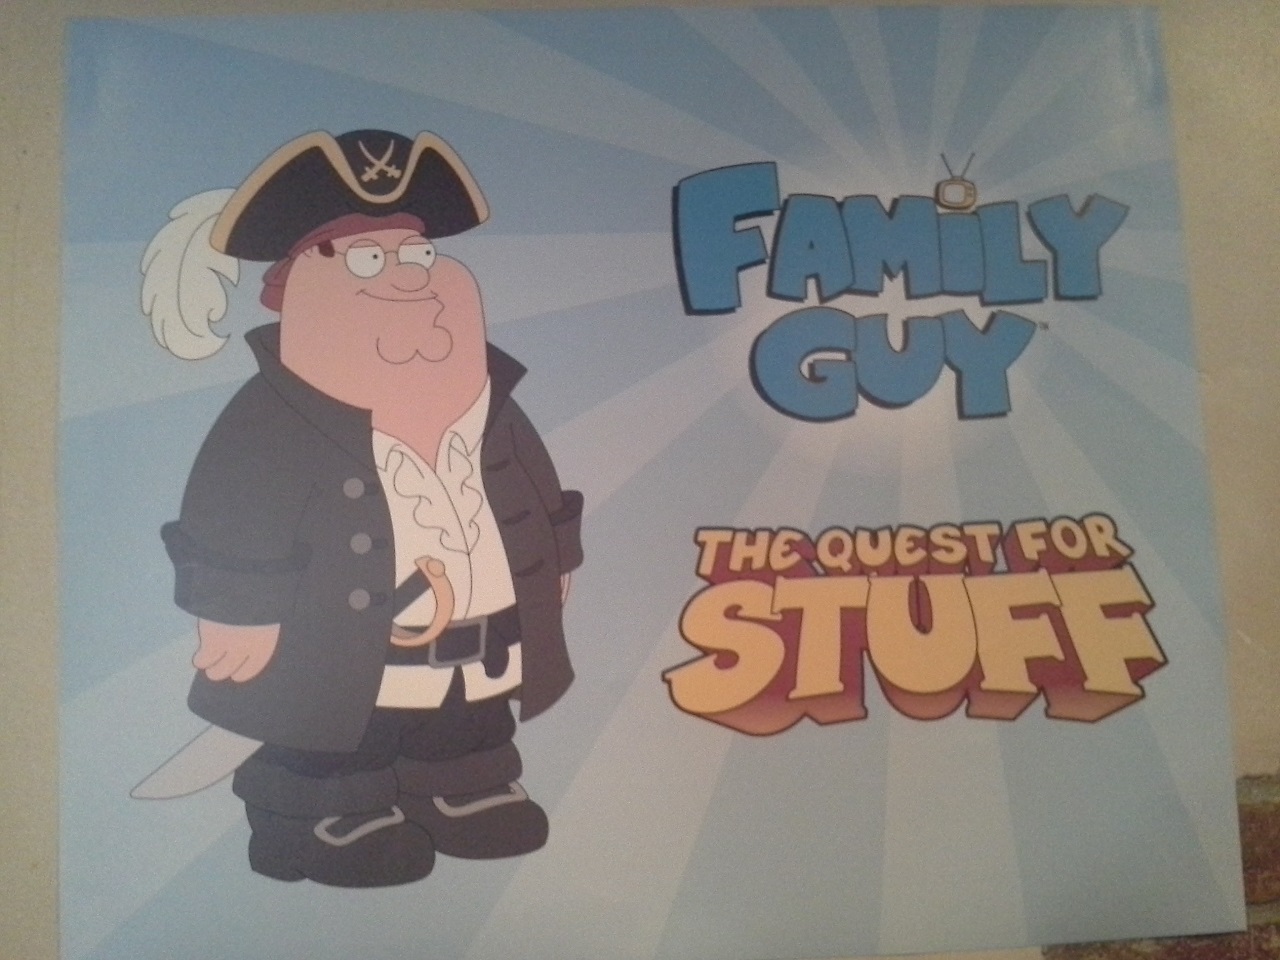 Family Guy Event 2